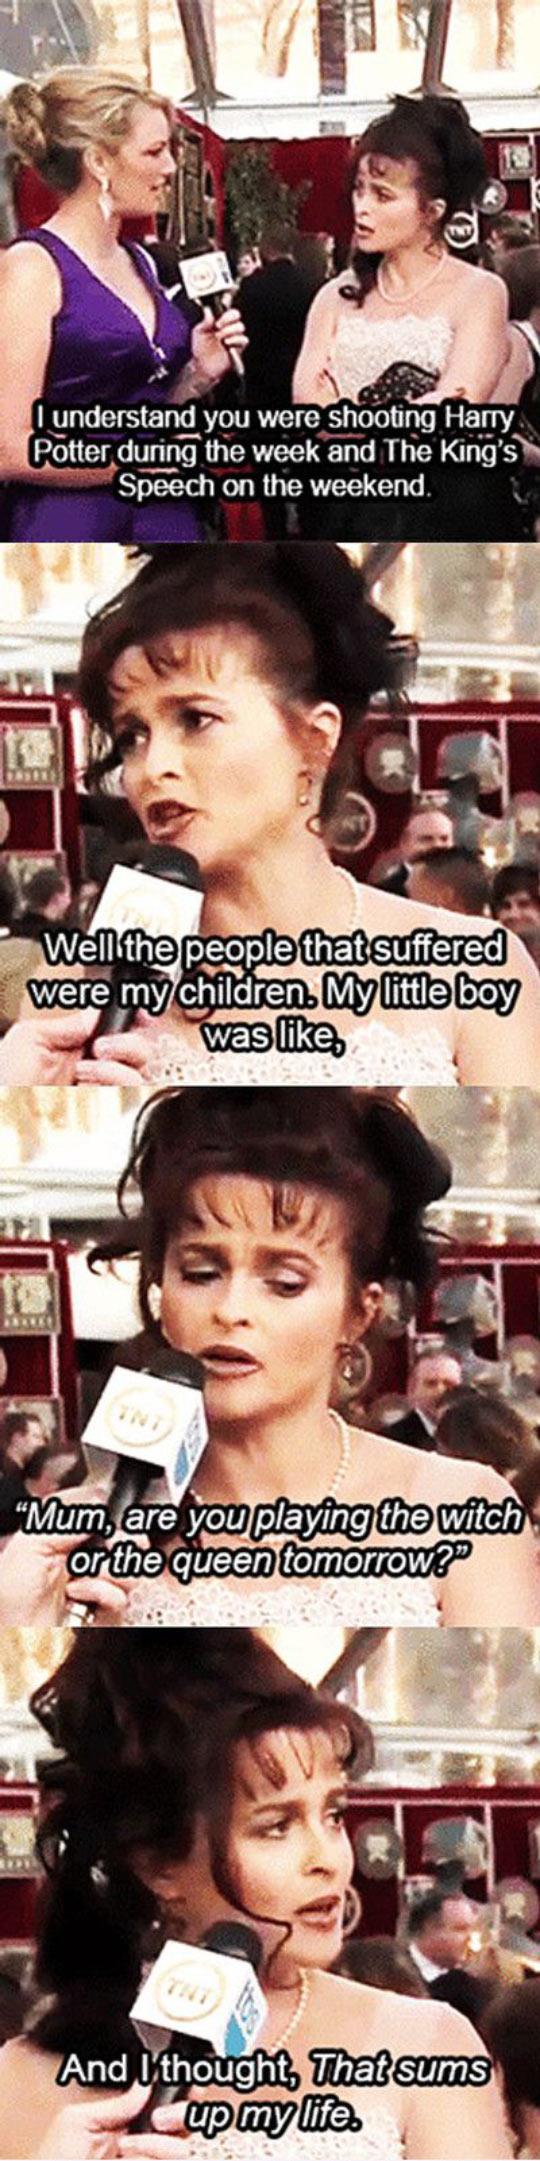 Helena Bonham Carter's Life